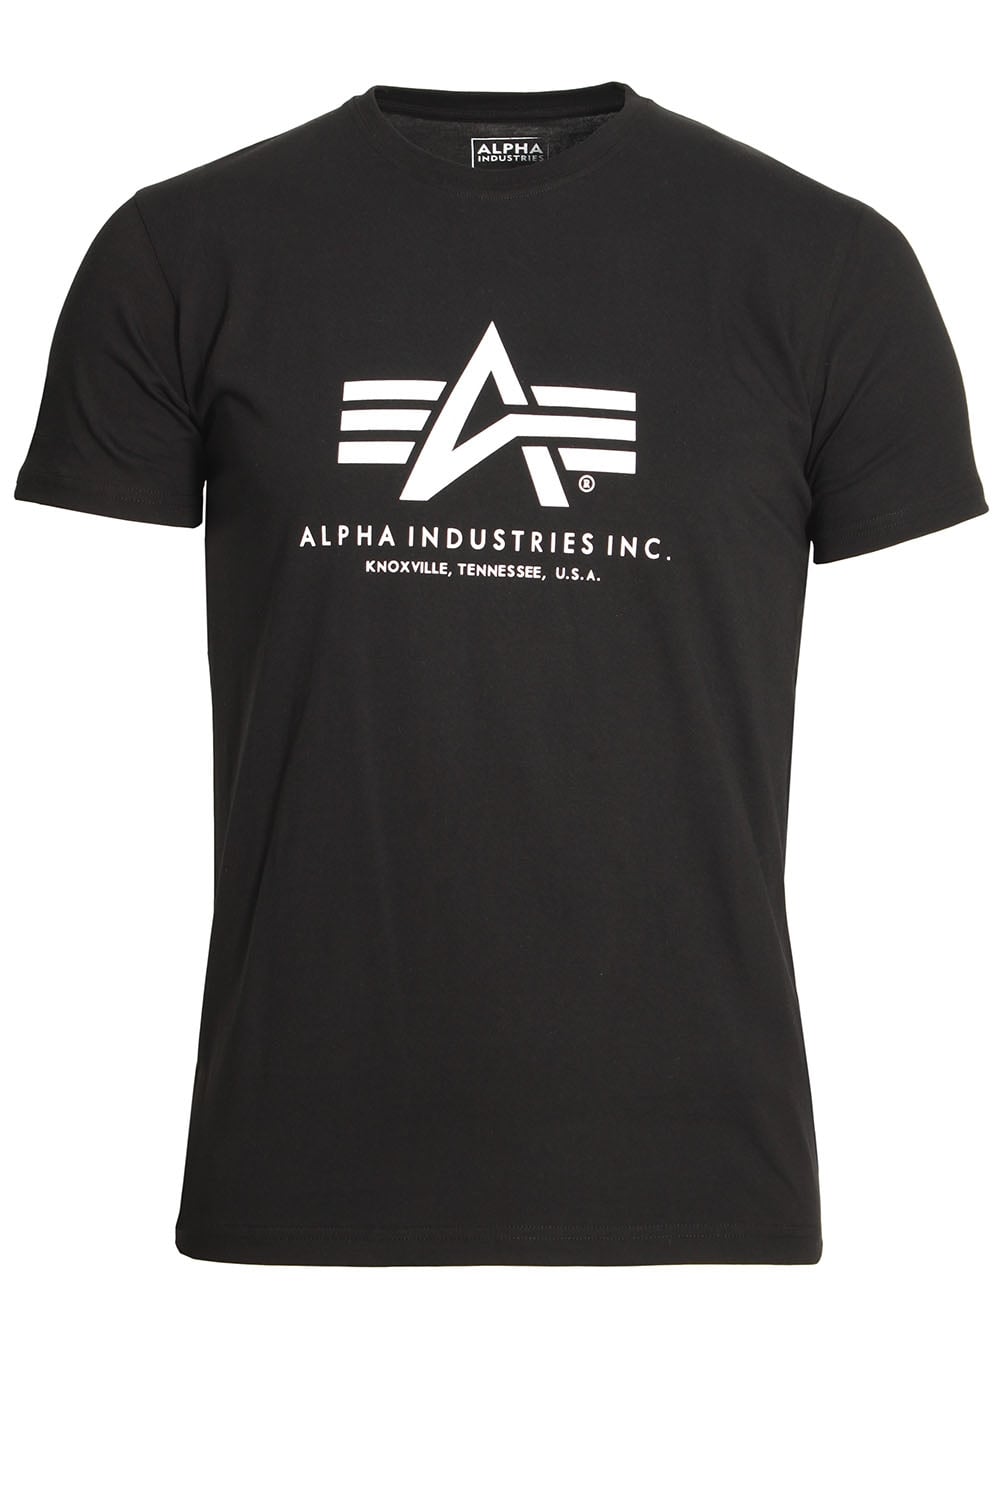 (100501/03) - Logo Industries Large Alpha T-Shirt - Basic 515 Black The